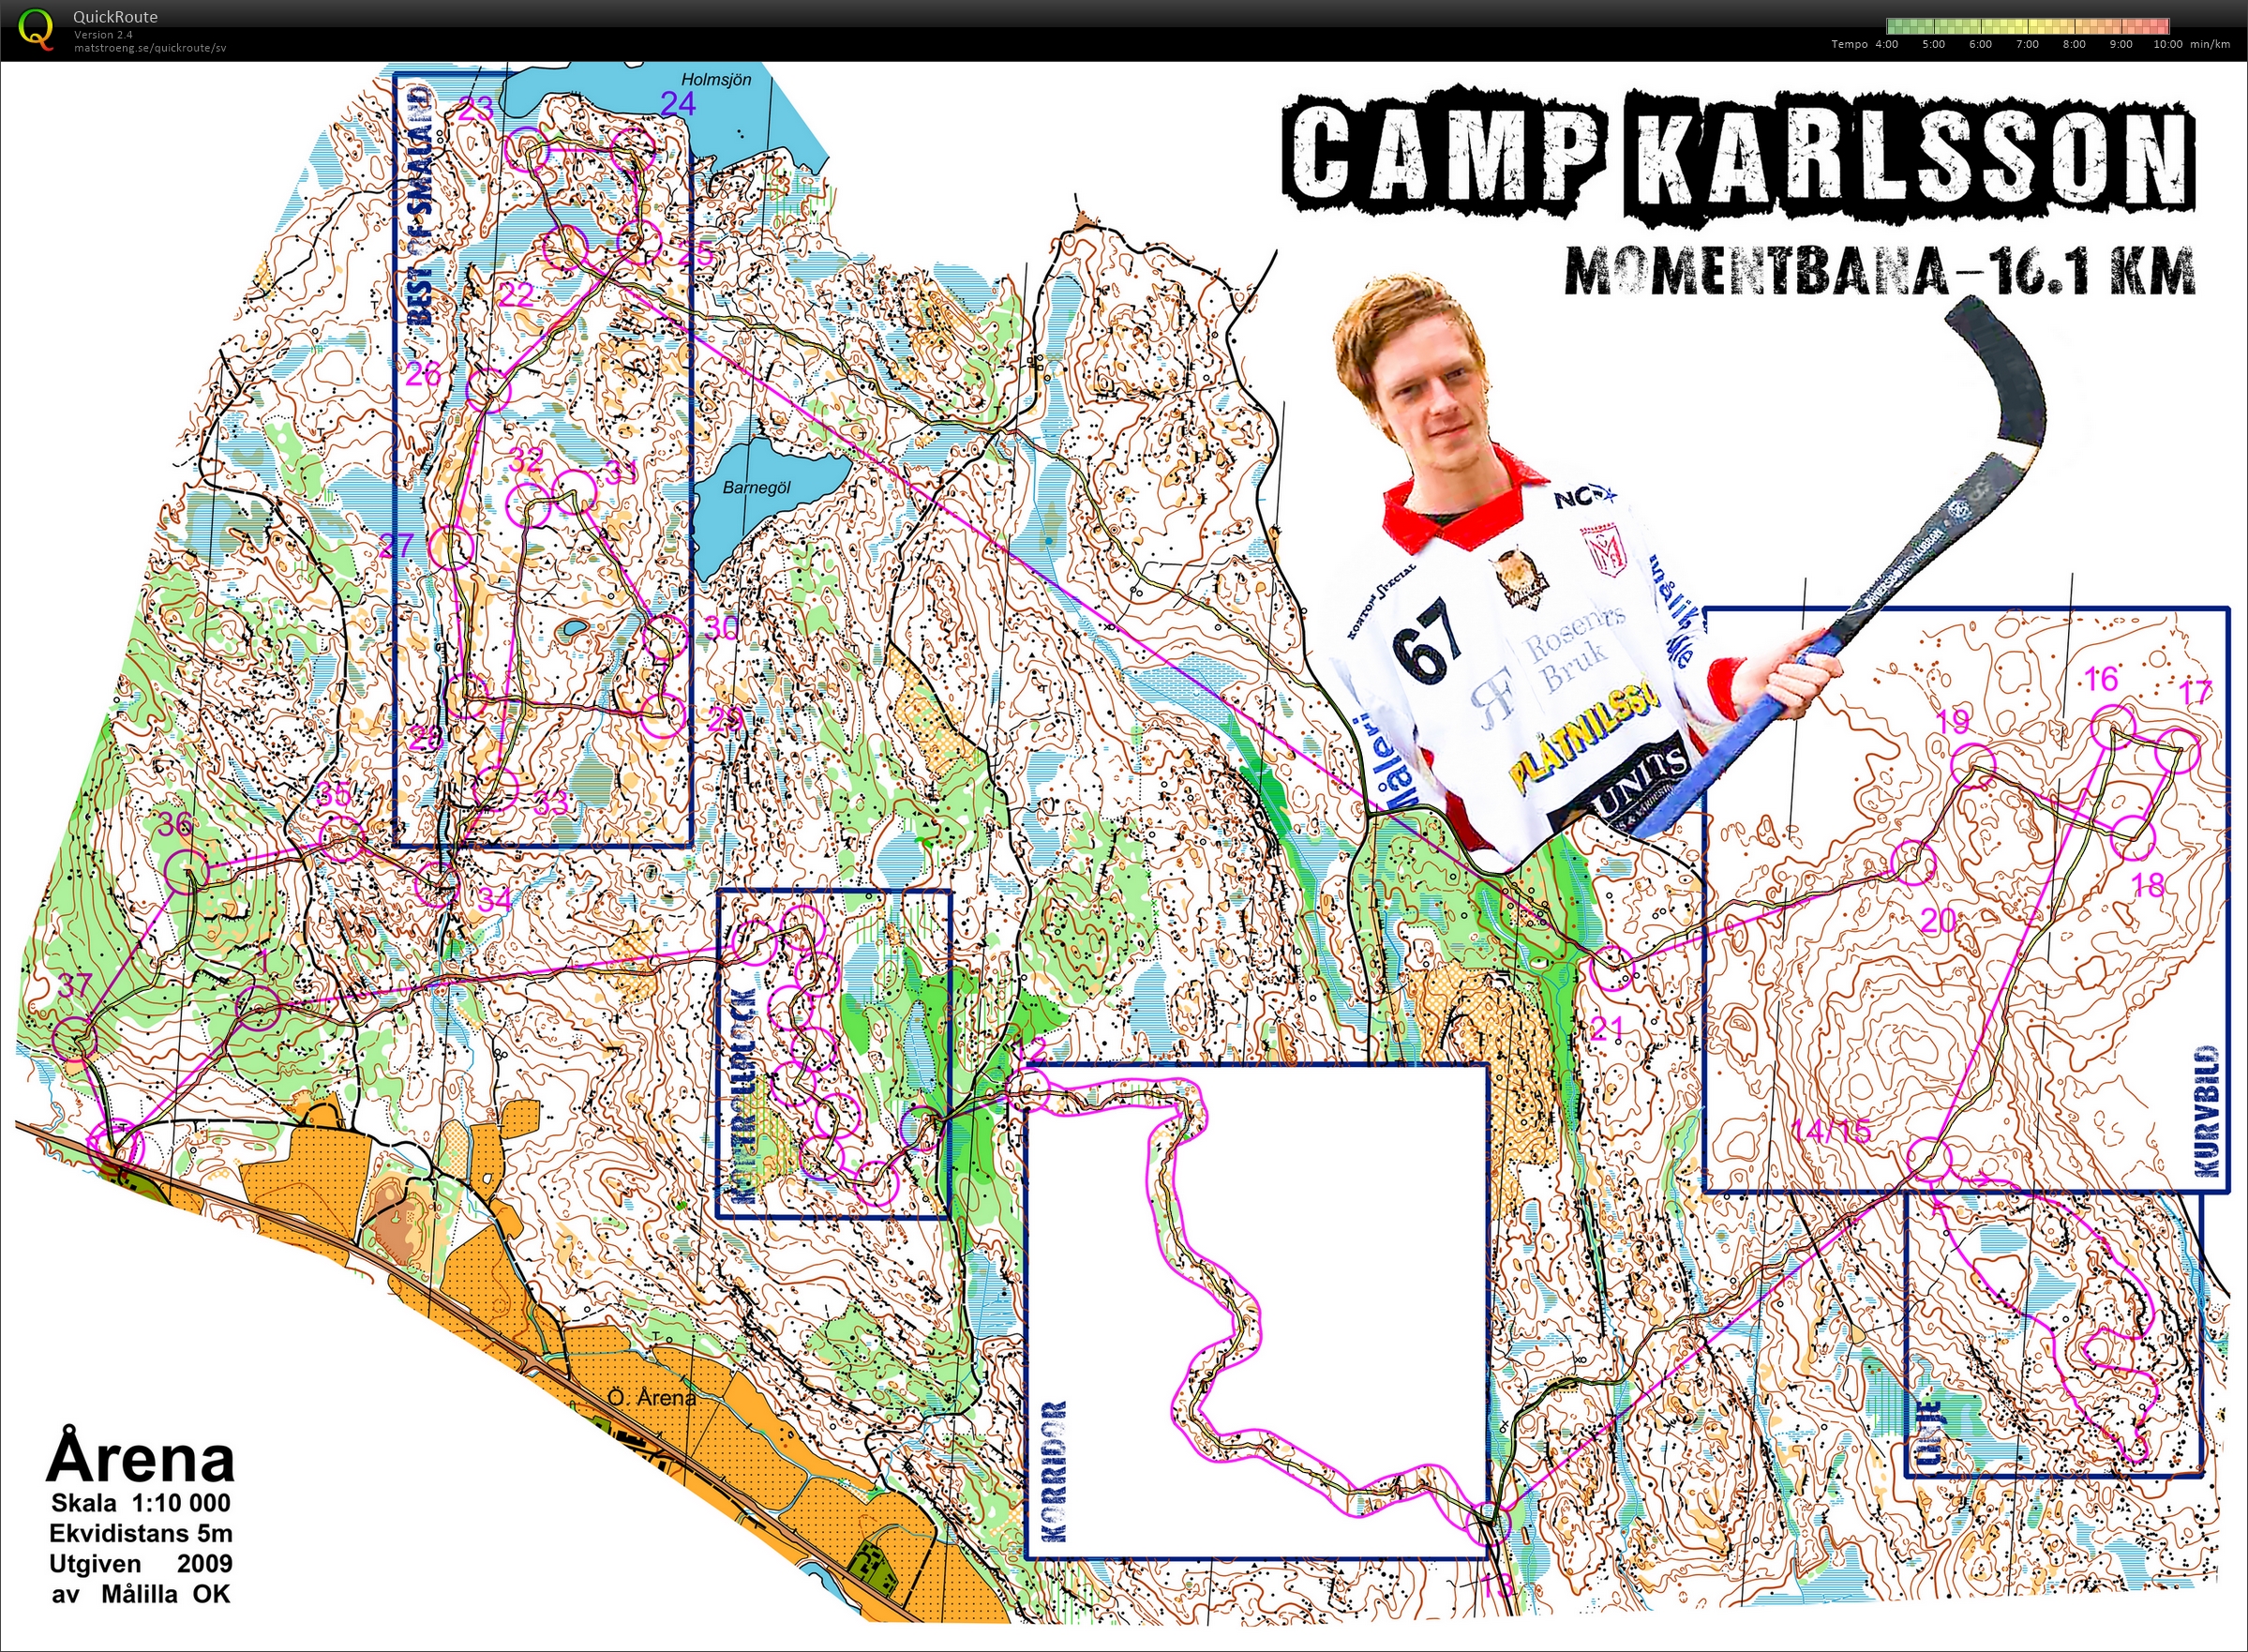 Camp Karlsson #6: Momentbana (2015-12-13)